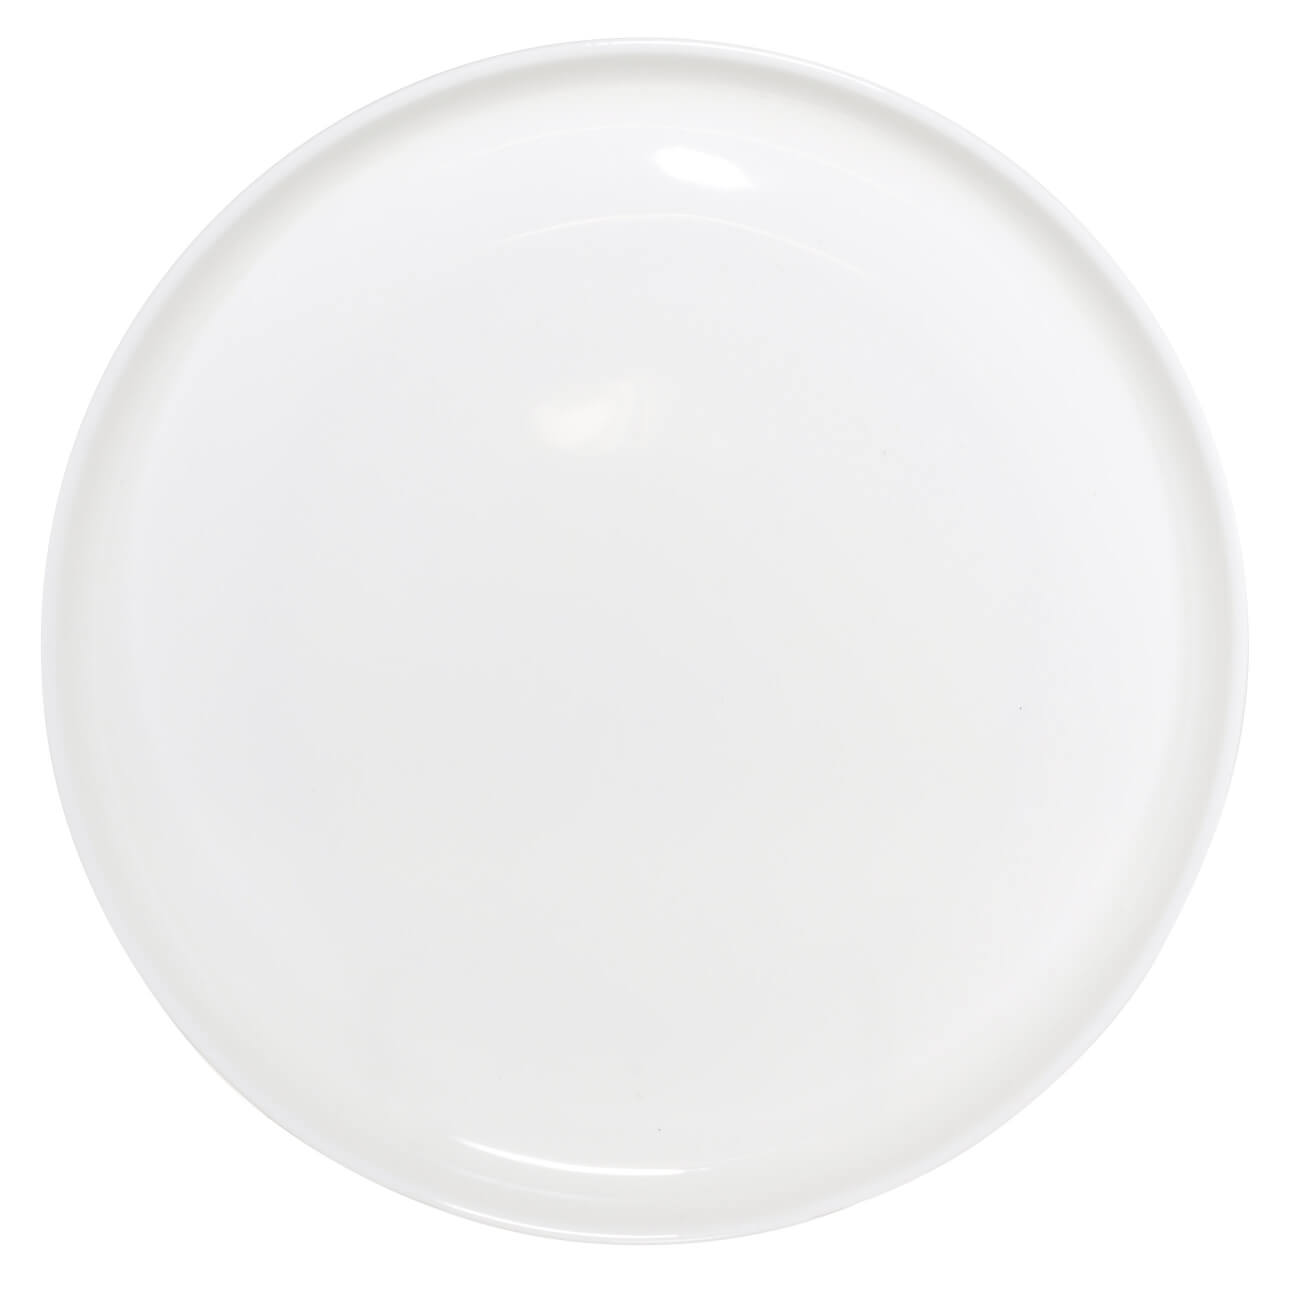 Тарелка обеденная, 26 см, фарфор F, белая, Ideal white тарелка закусочная 24 см 2 шт фарфор f antarctica